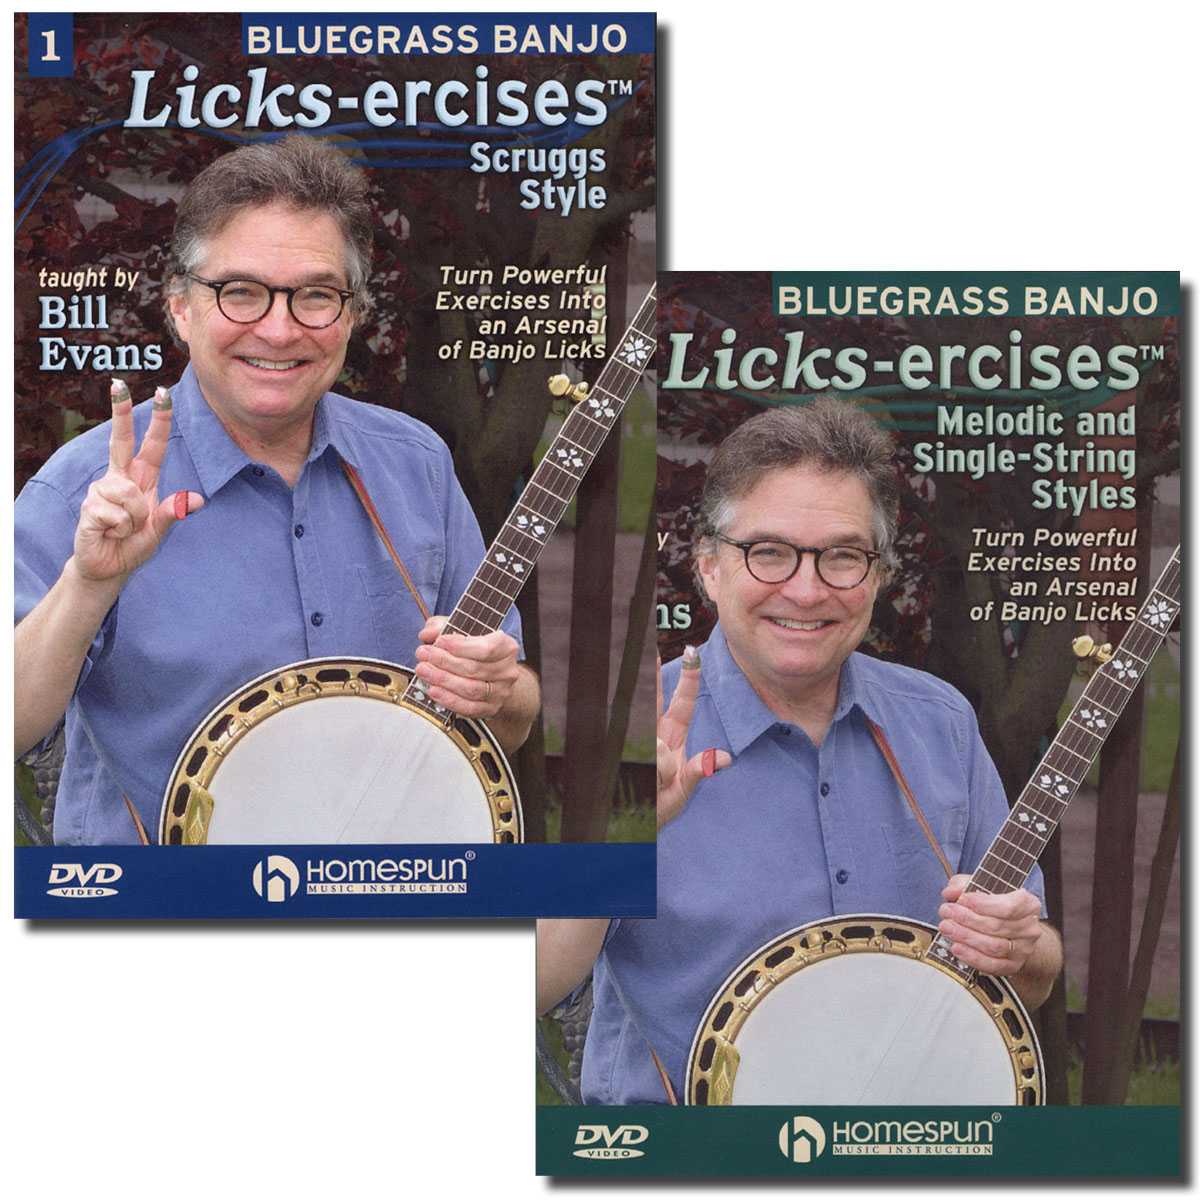 Image 1 of DVD - Bluegrass Banjo Licks-Ercises: Two DVD Set - SKU# 300-DVD475SET : Product Type Media : Elderly Instruments